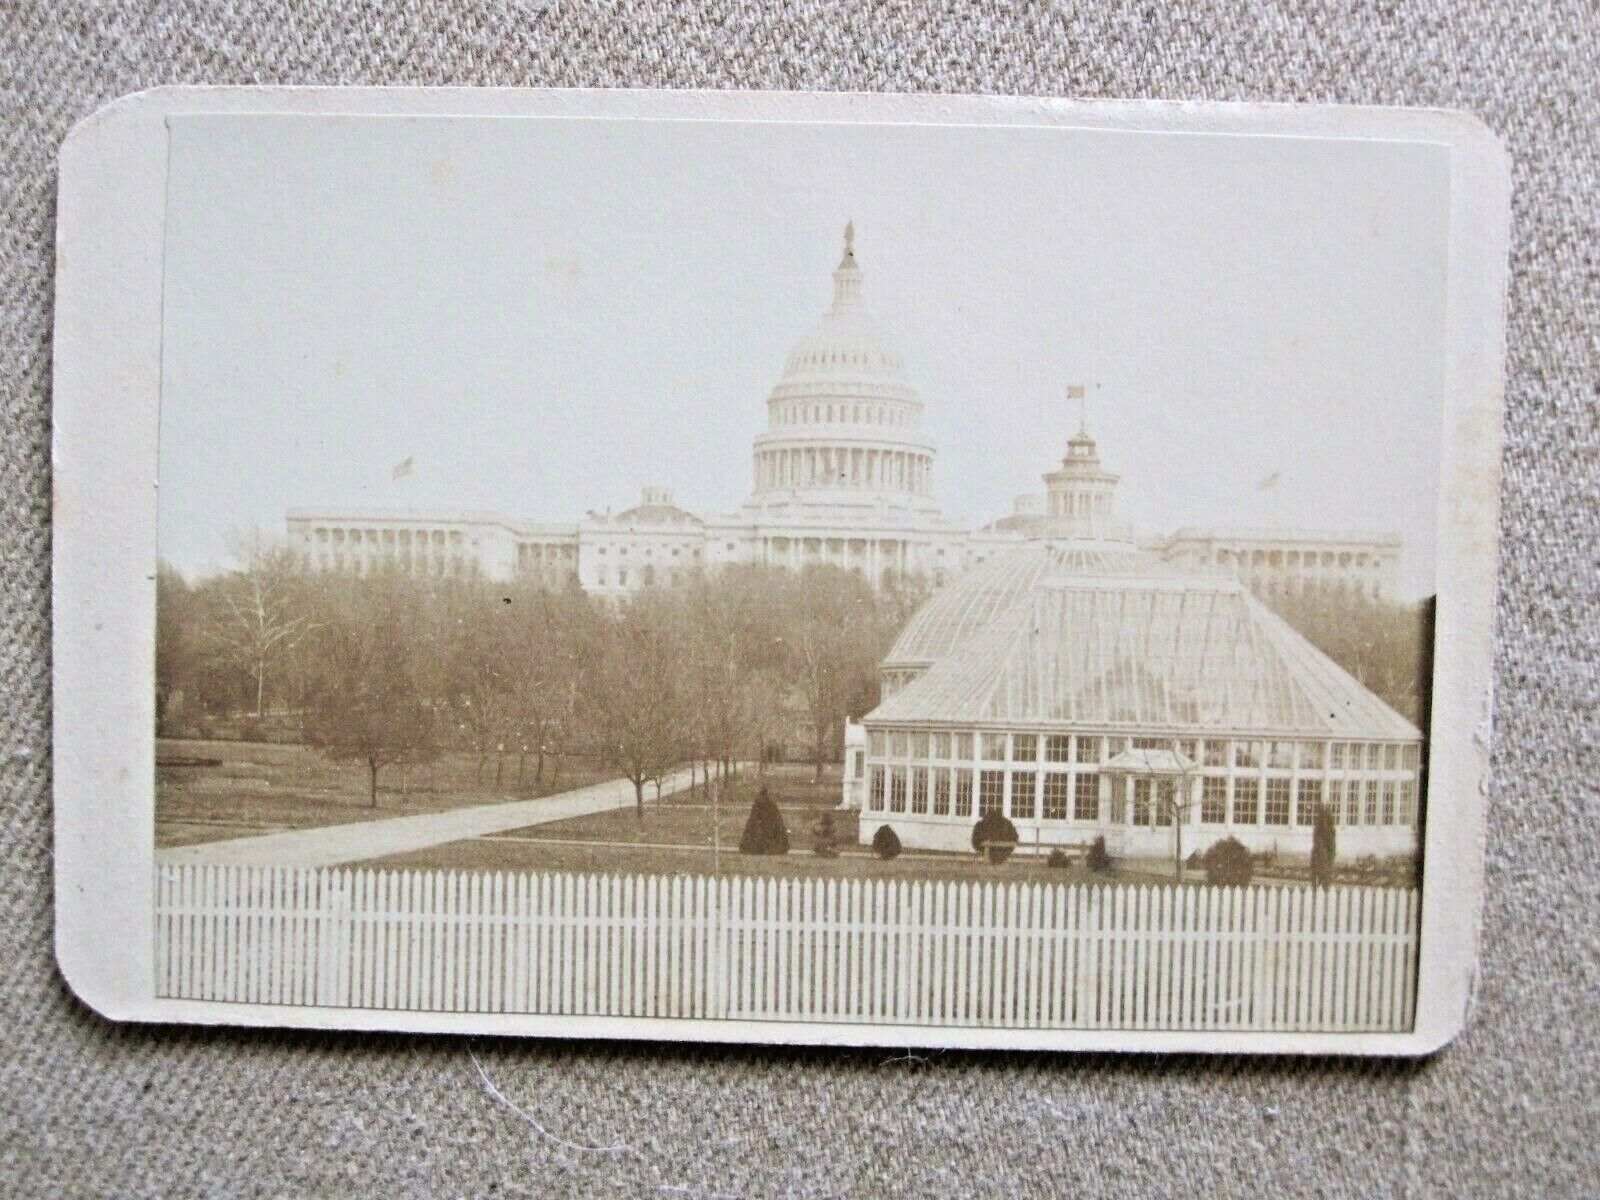 CDV - CW Era View of the Capitol Building in Washington, DC